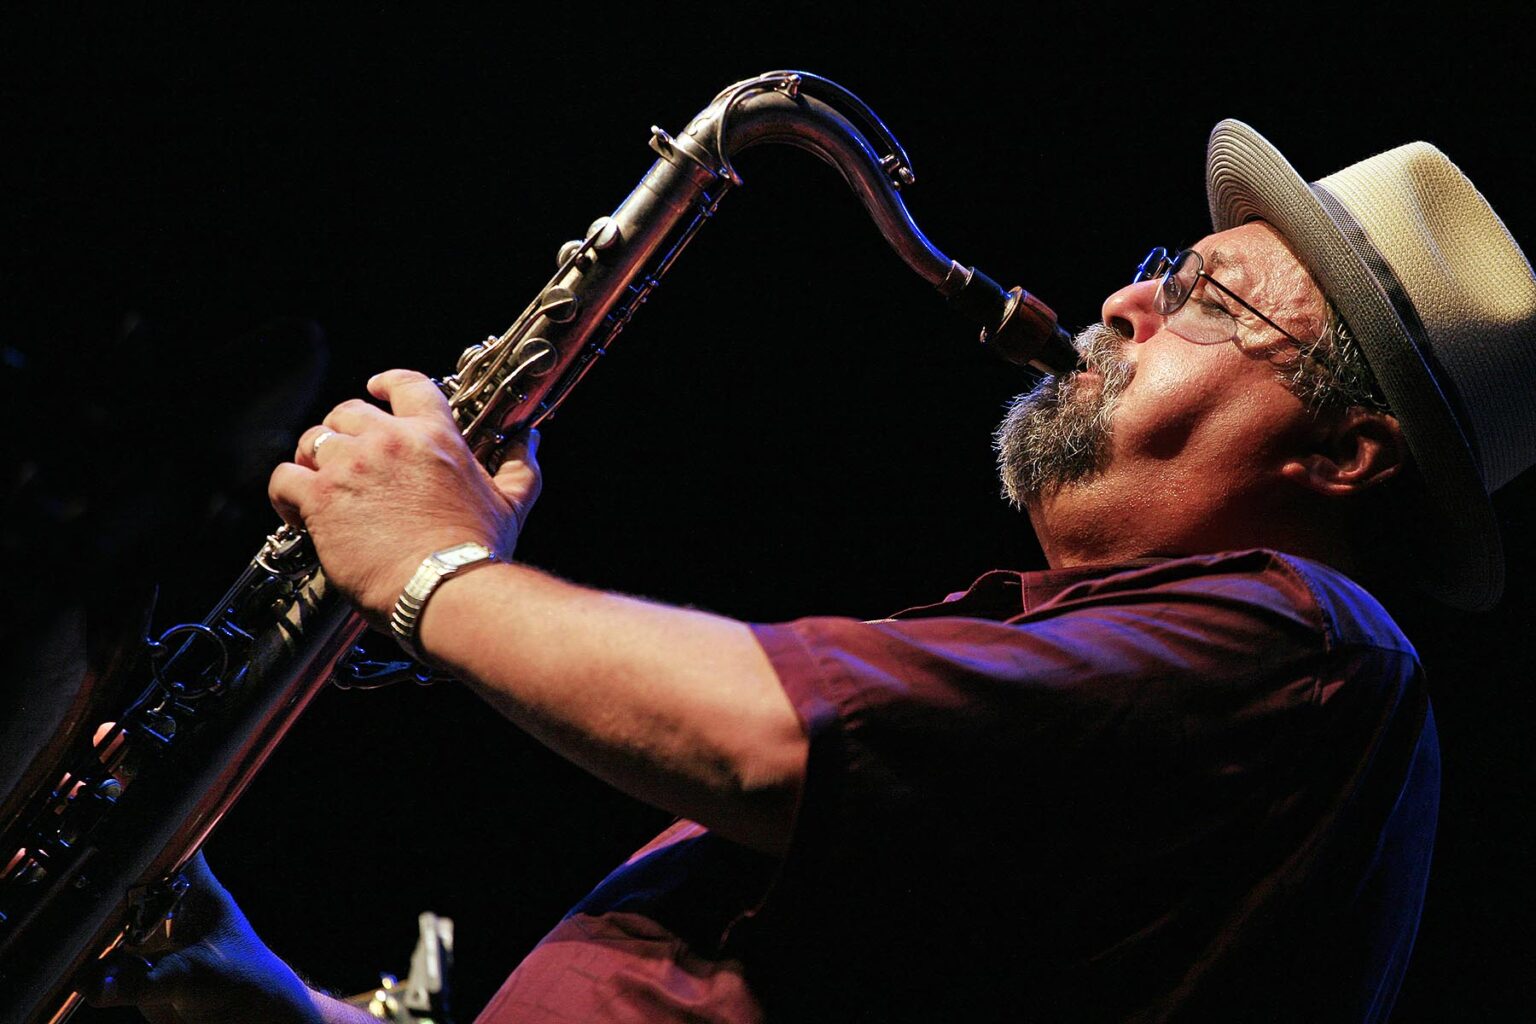 JOE LOVANO plays saxophone with the JOHN PATITUCCI TRIO at the 2009 MONTEREY JAZZ FESTIVAL - CALIFORNIA